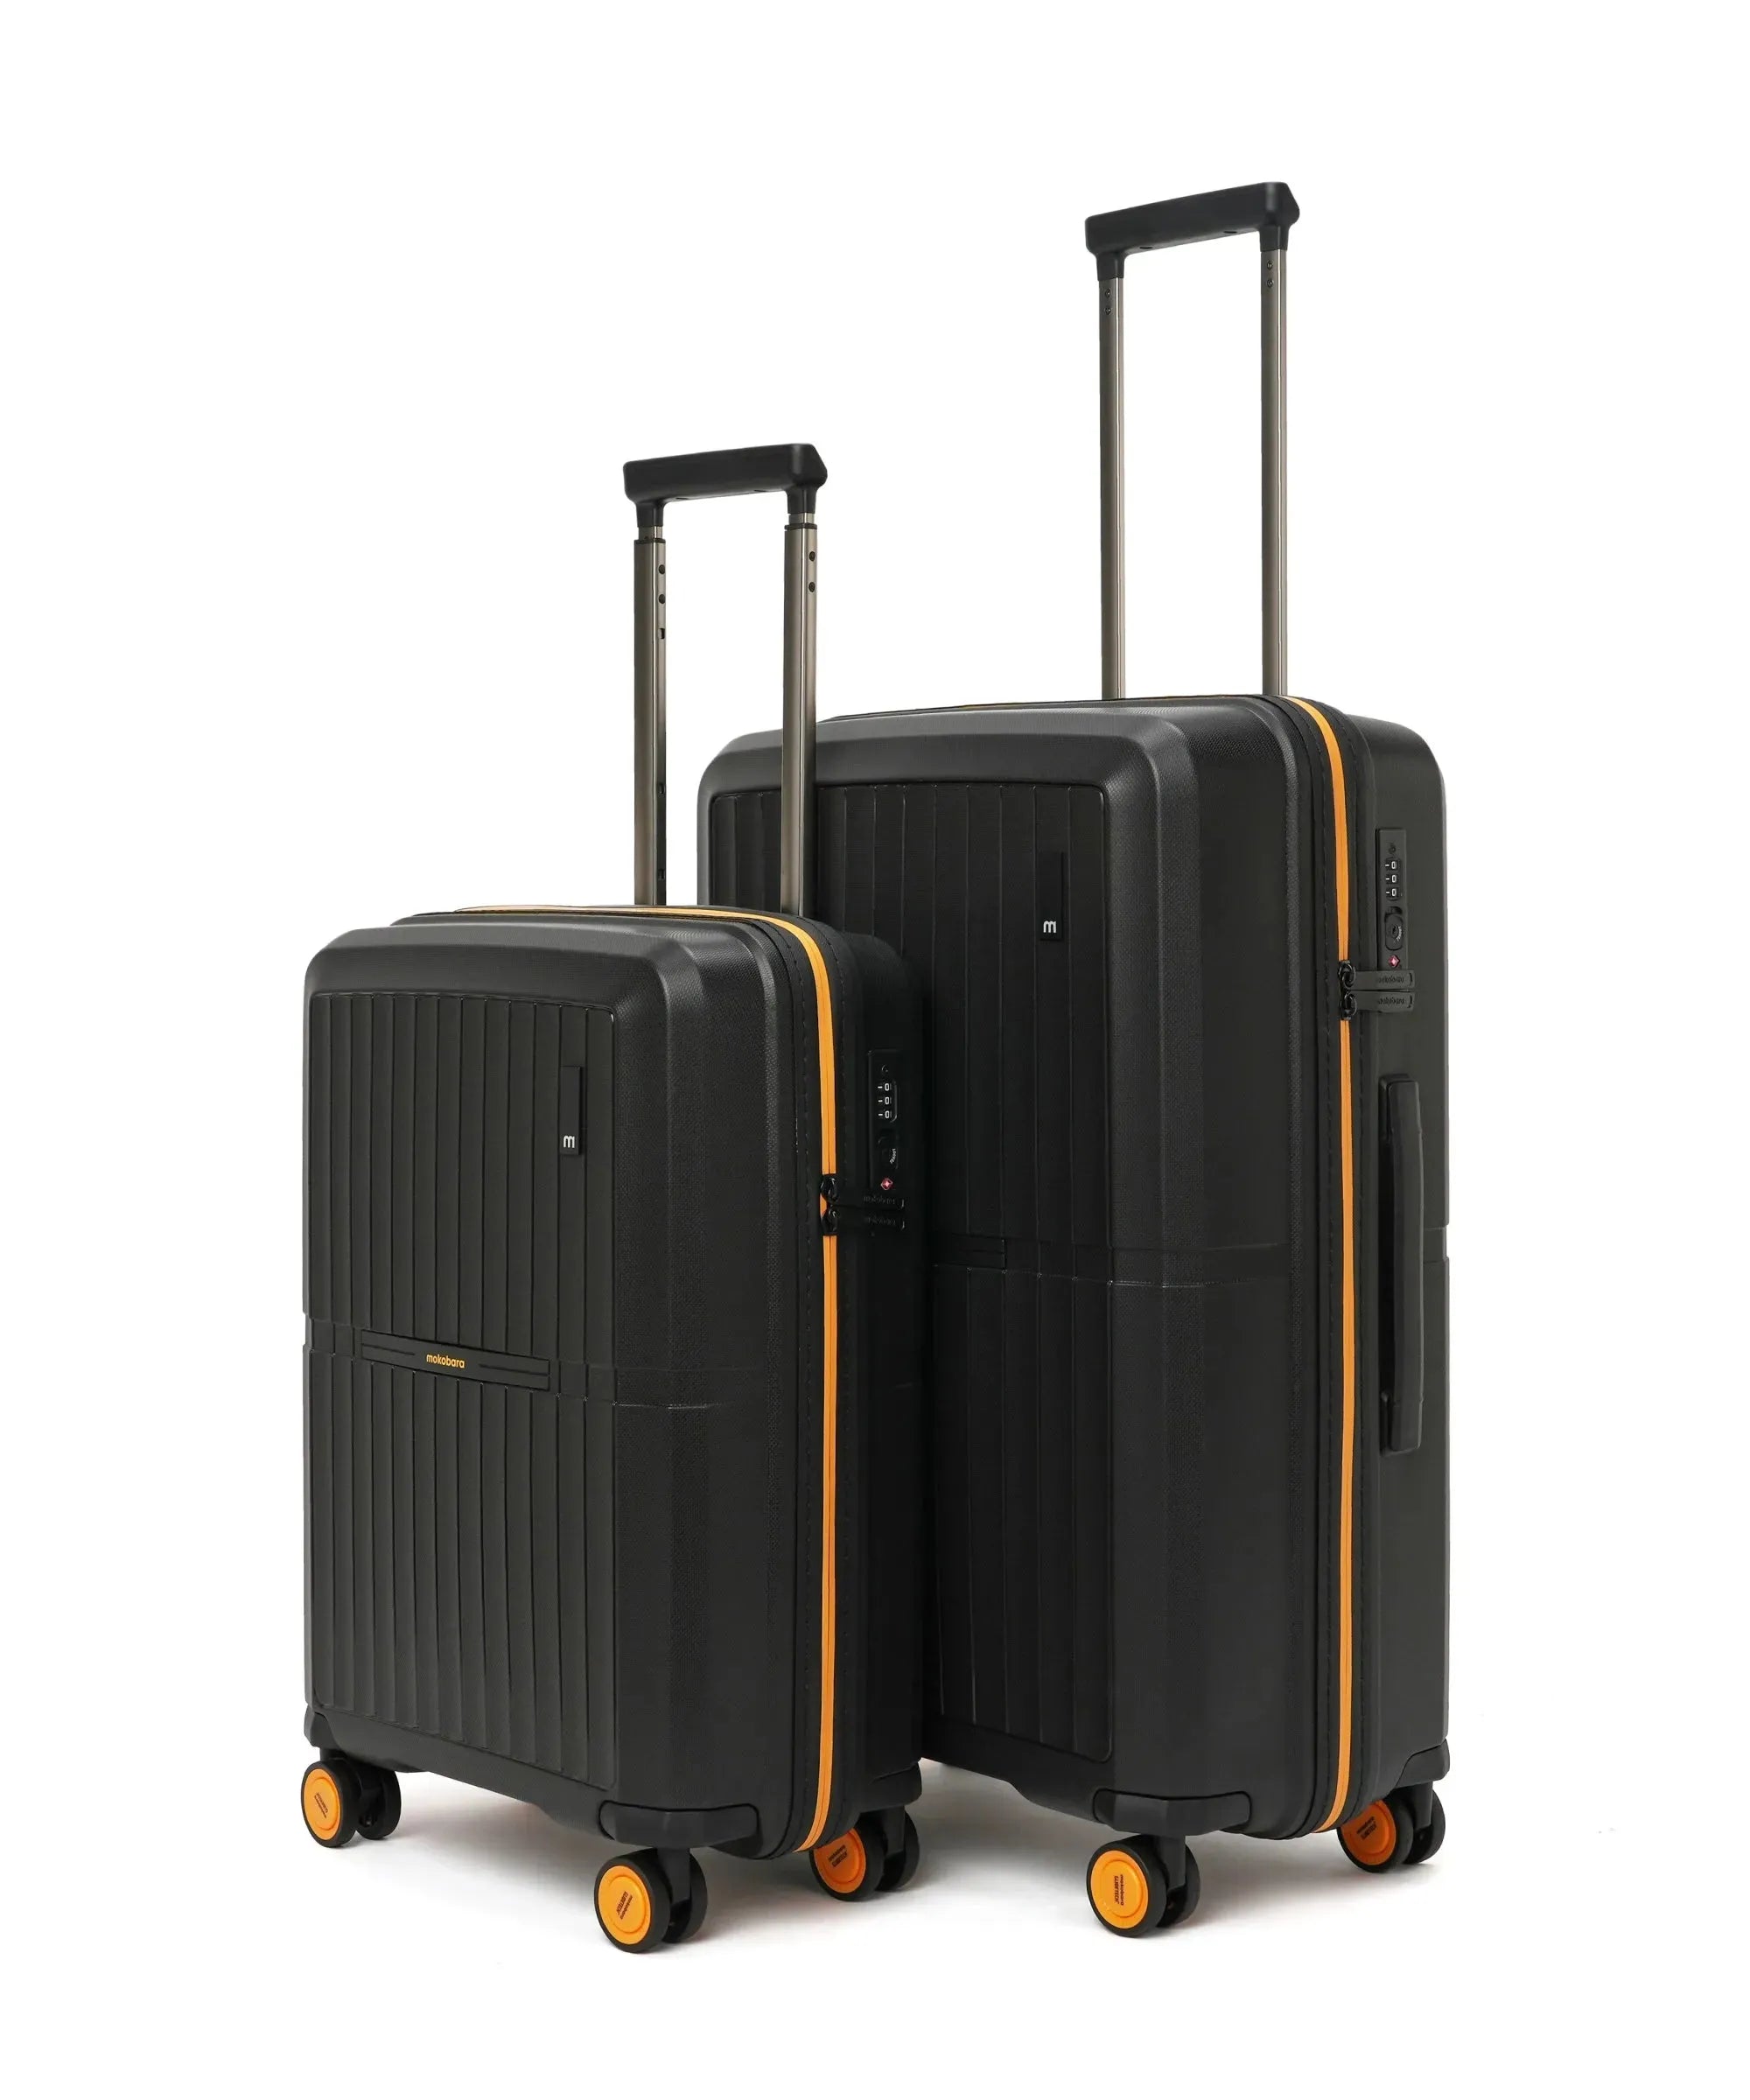 The Aviator Set of 2 Luggage